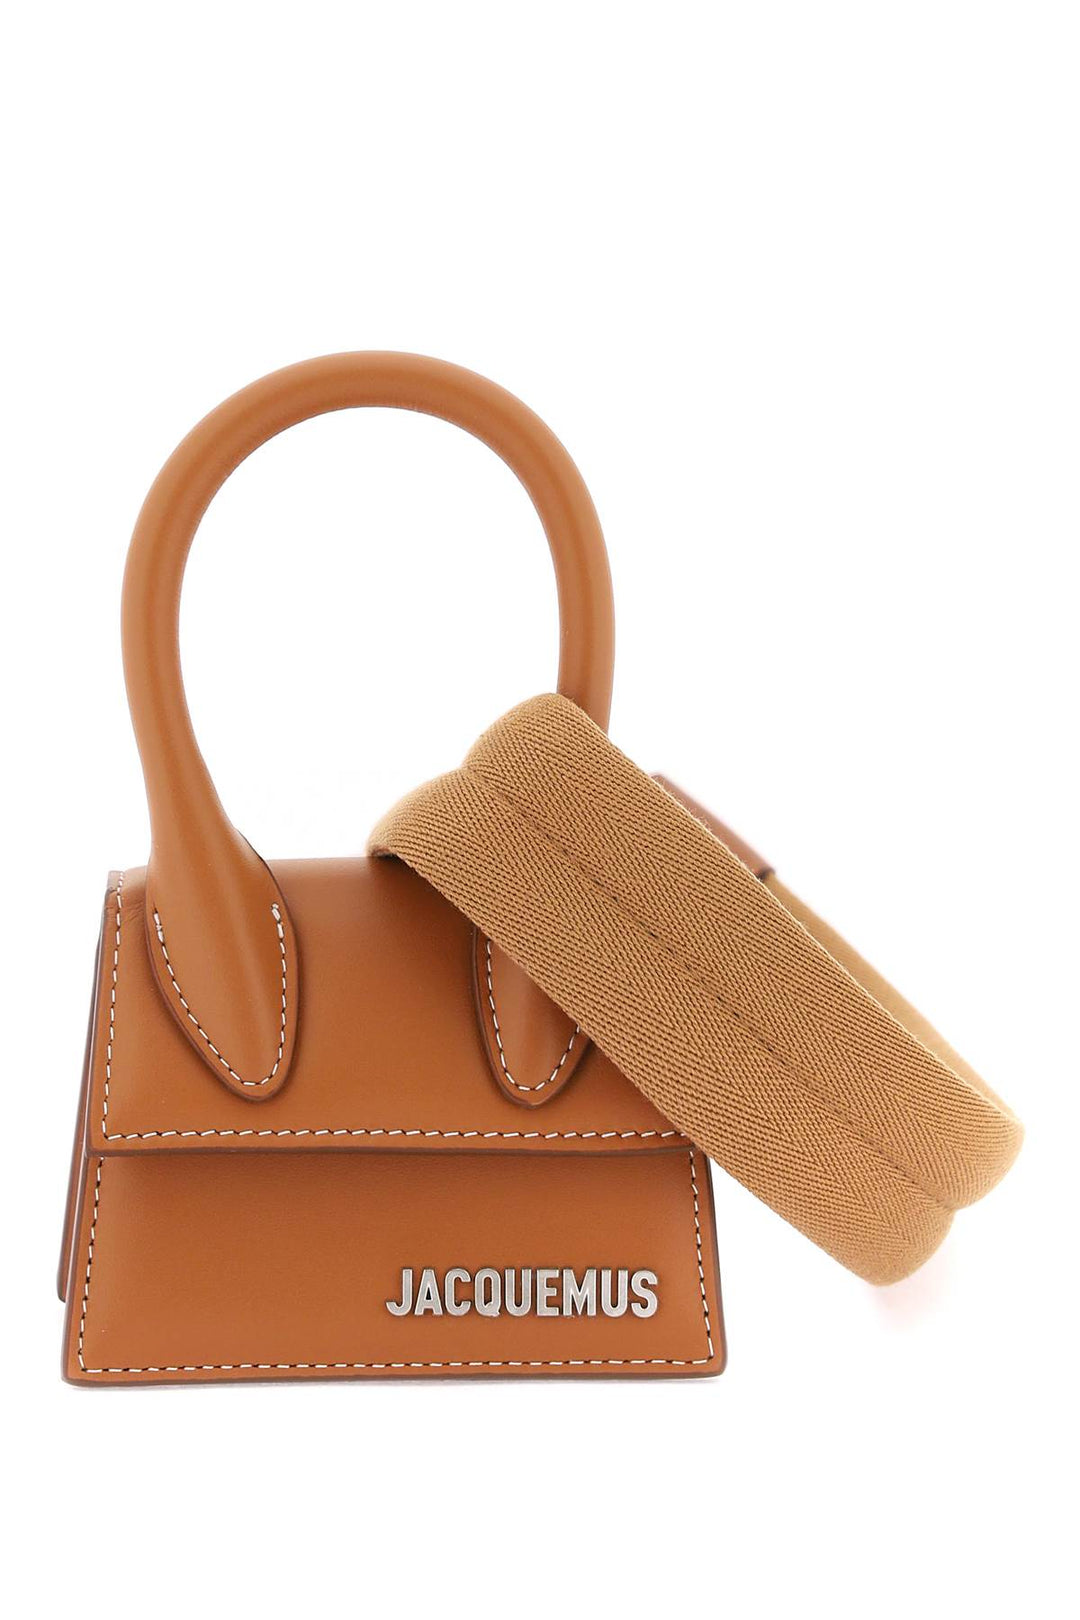 Jacquemus 'le chiquito' mini bag-0